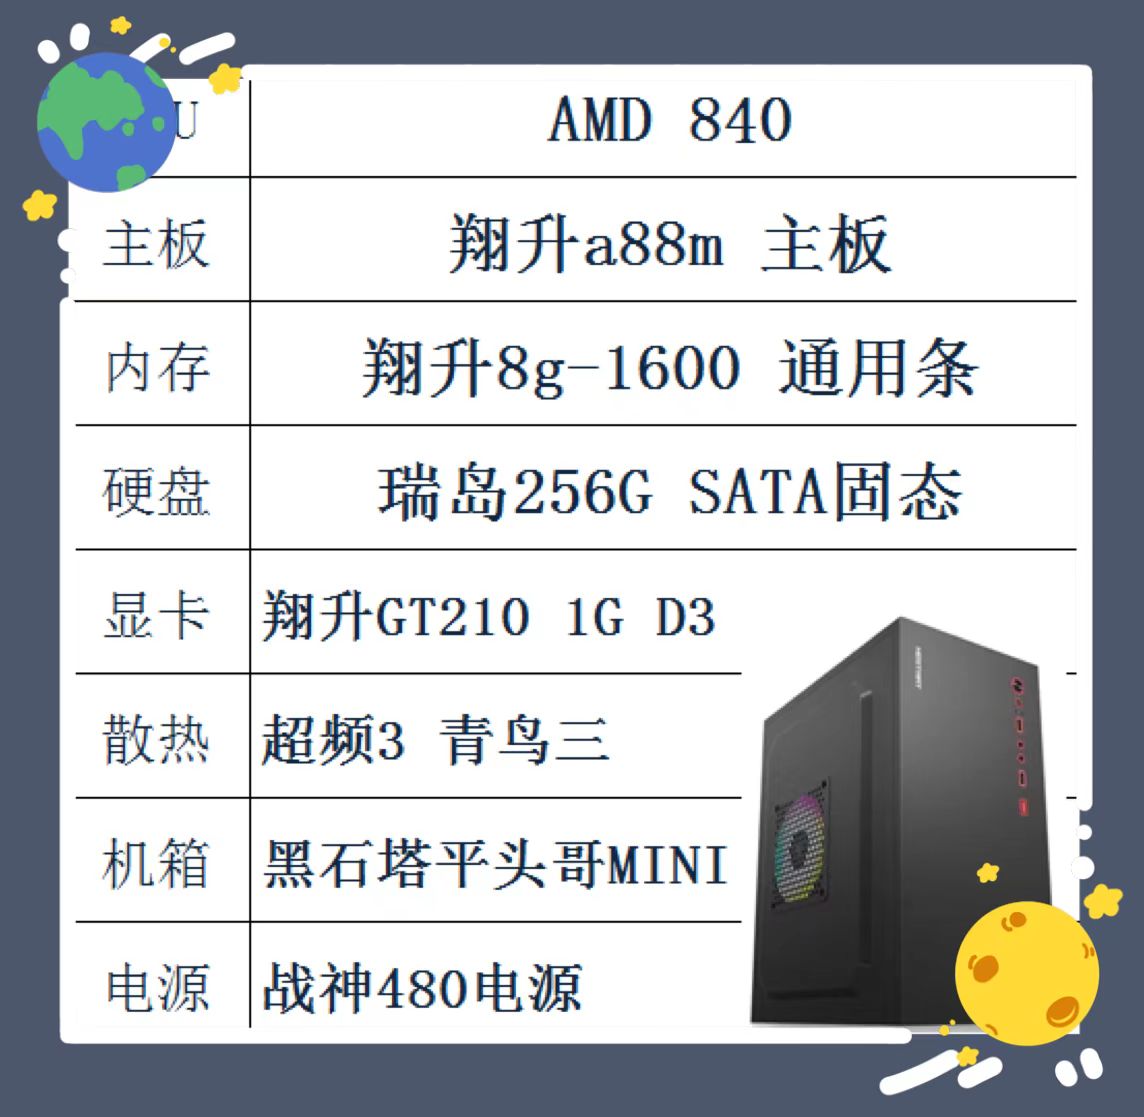 AMD 840 翔升a88m 主板 8g-1600内存 256G固态 黑石塔MI...